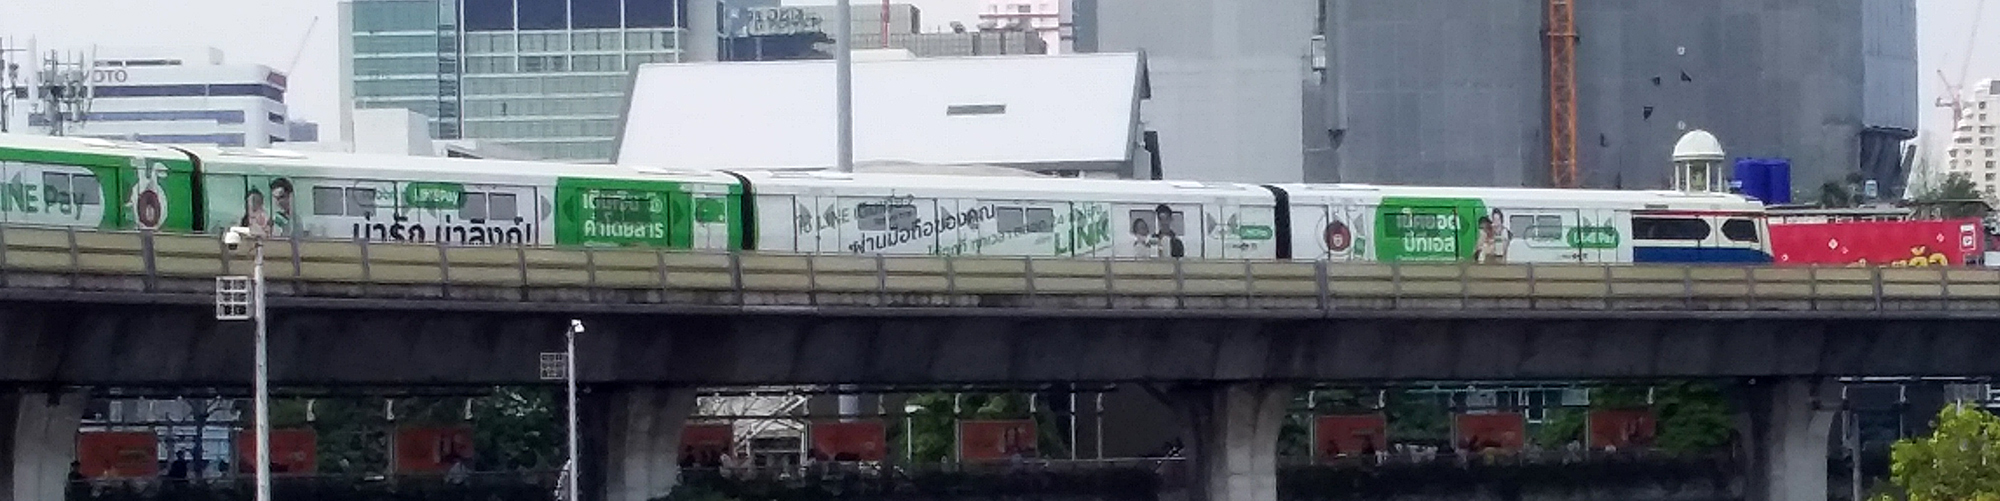 BTS Sukhumvit Line (Green Line) at Victory Monument, Bangkok